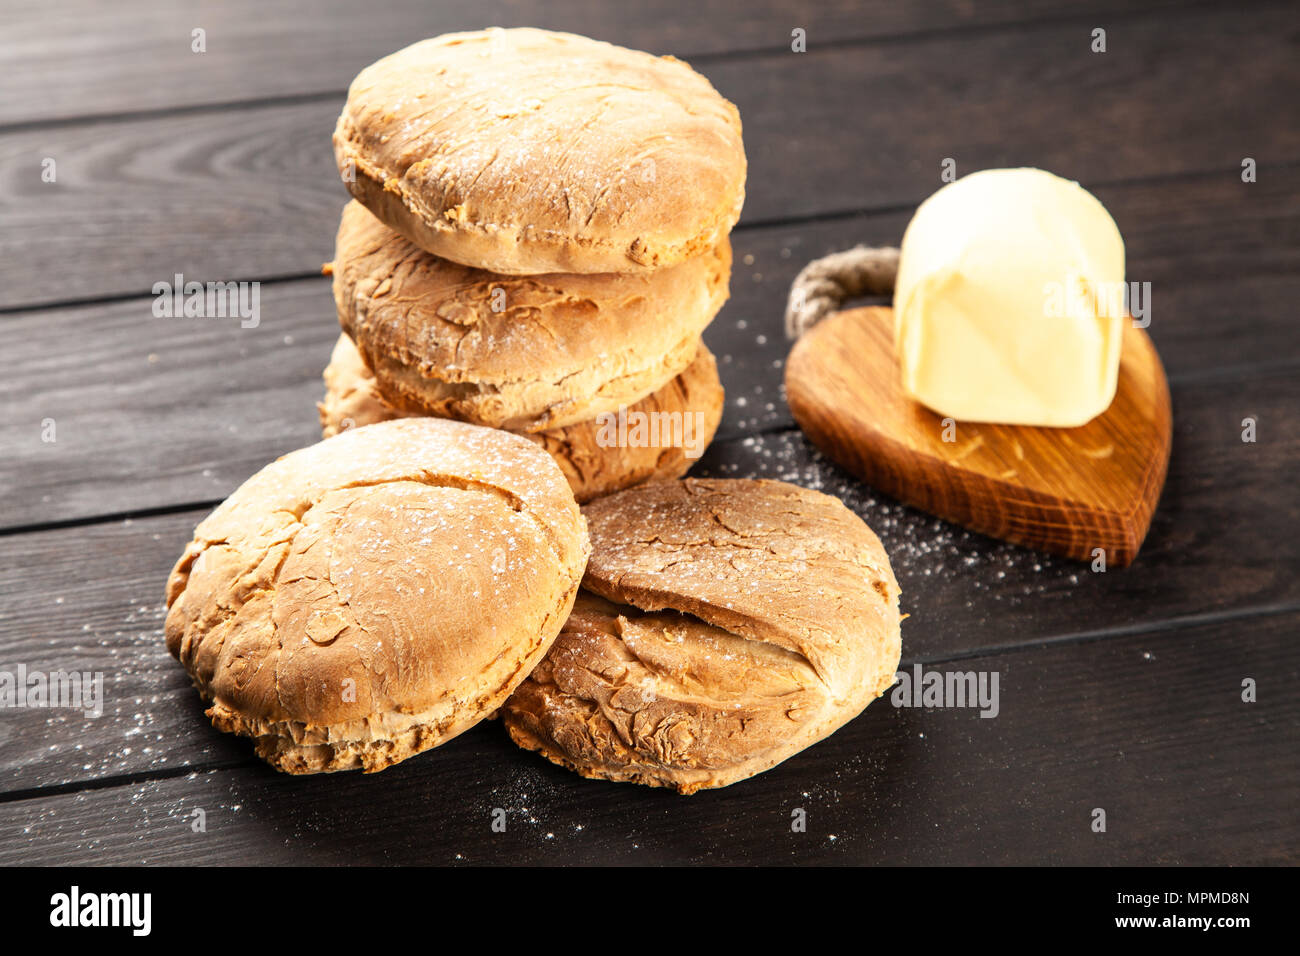 Homemade buns on dark background Stock Photo